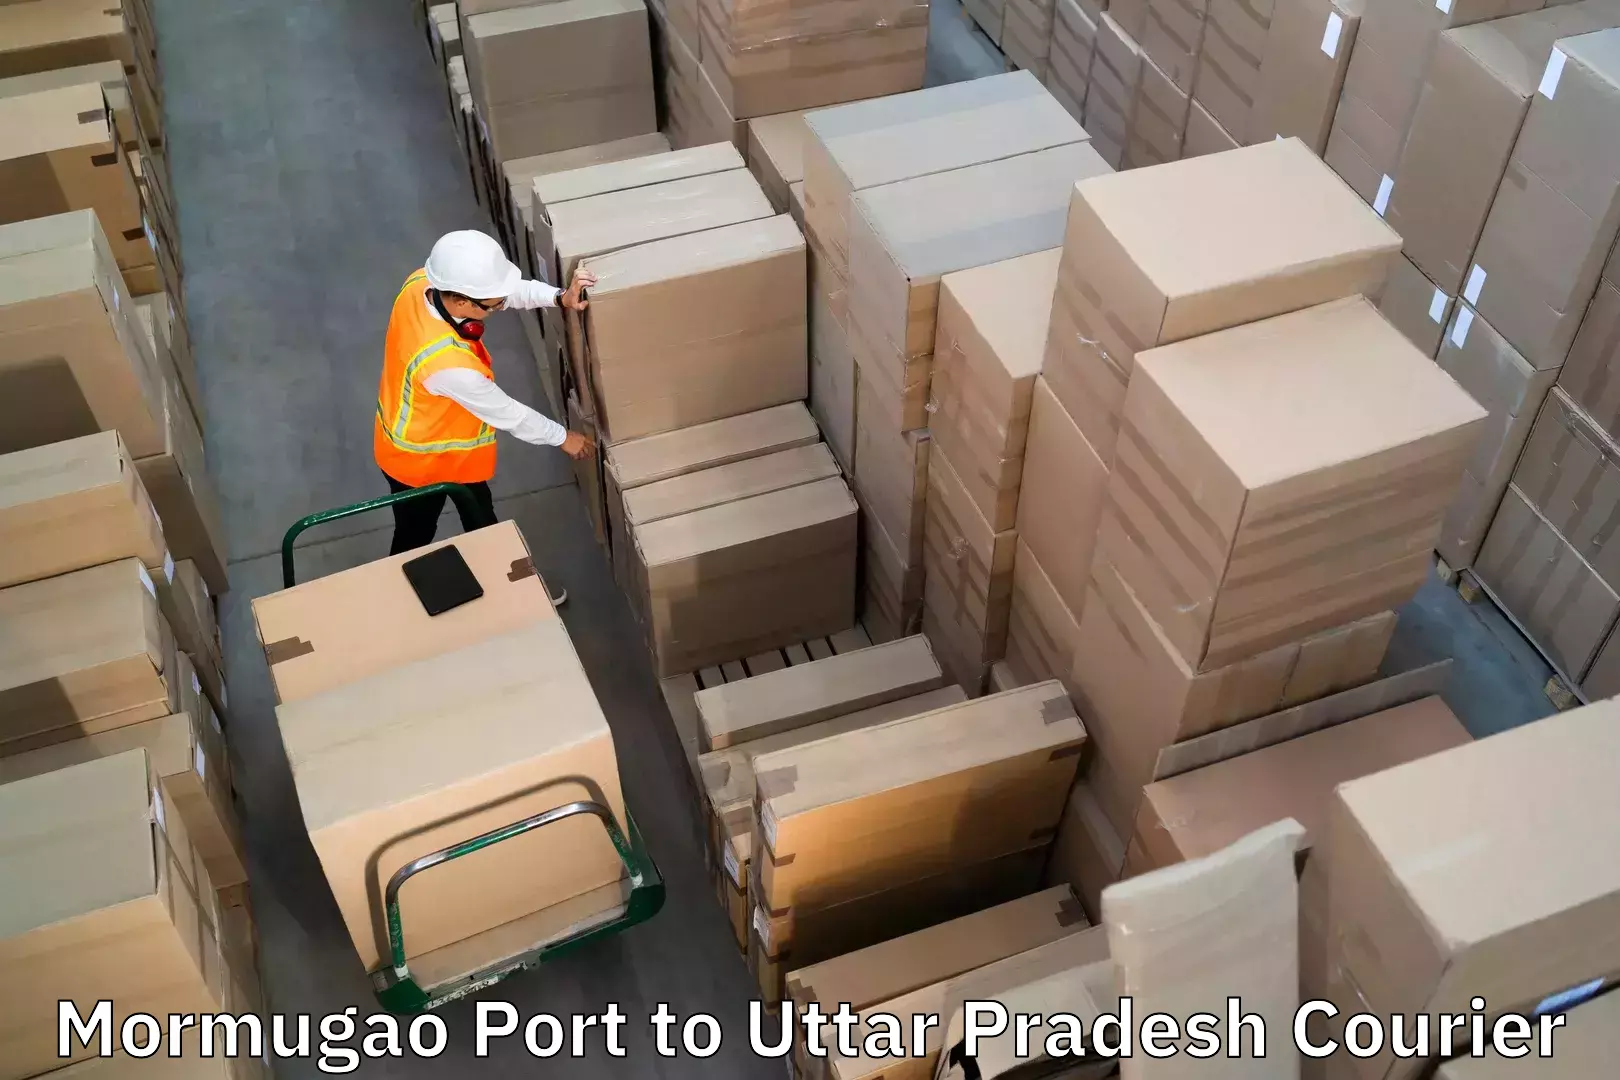 Luggage transport company Mormugao Port to Ghaziabad